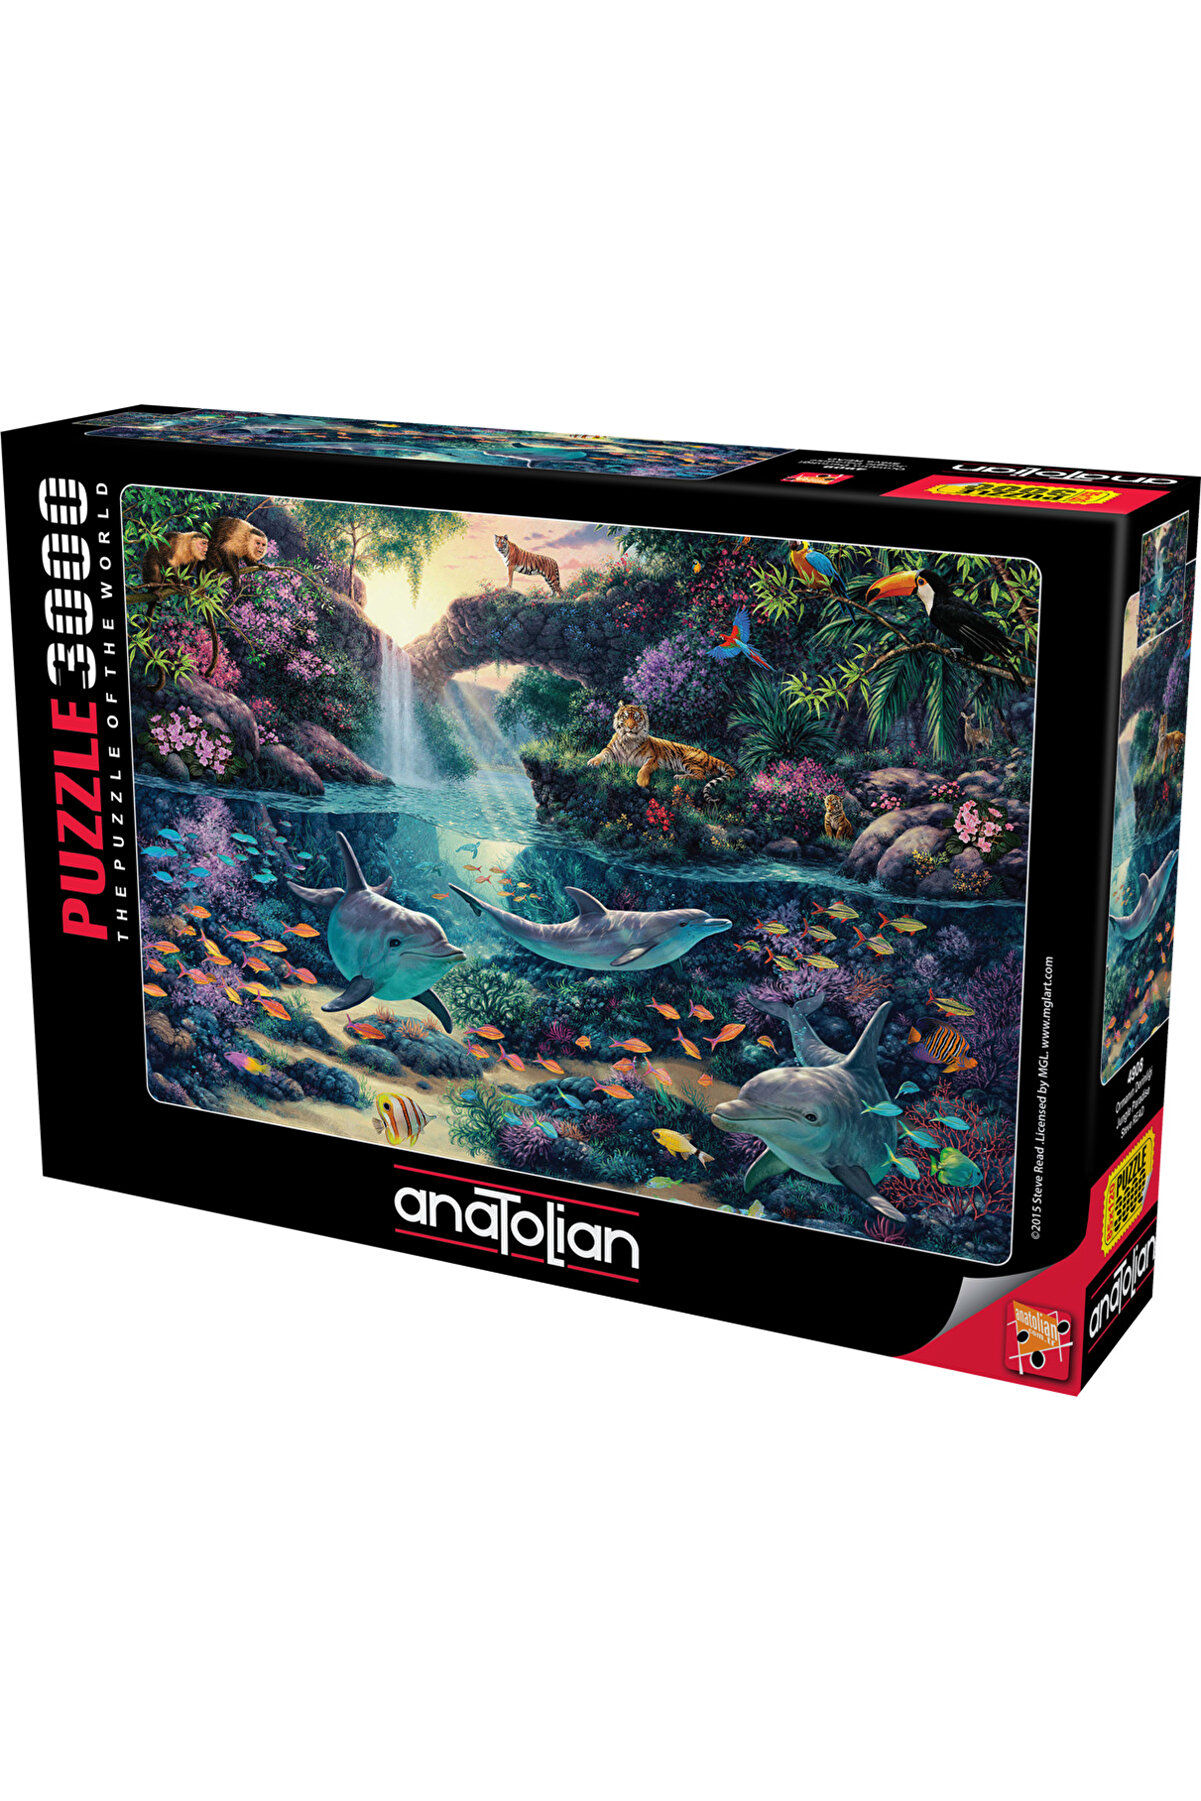 Anatolian Puzzle 3000 Parçalık Puzzle / Ormanın Derinliği - Kod:4908